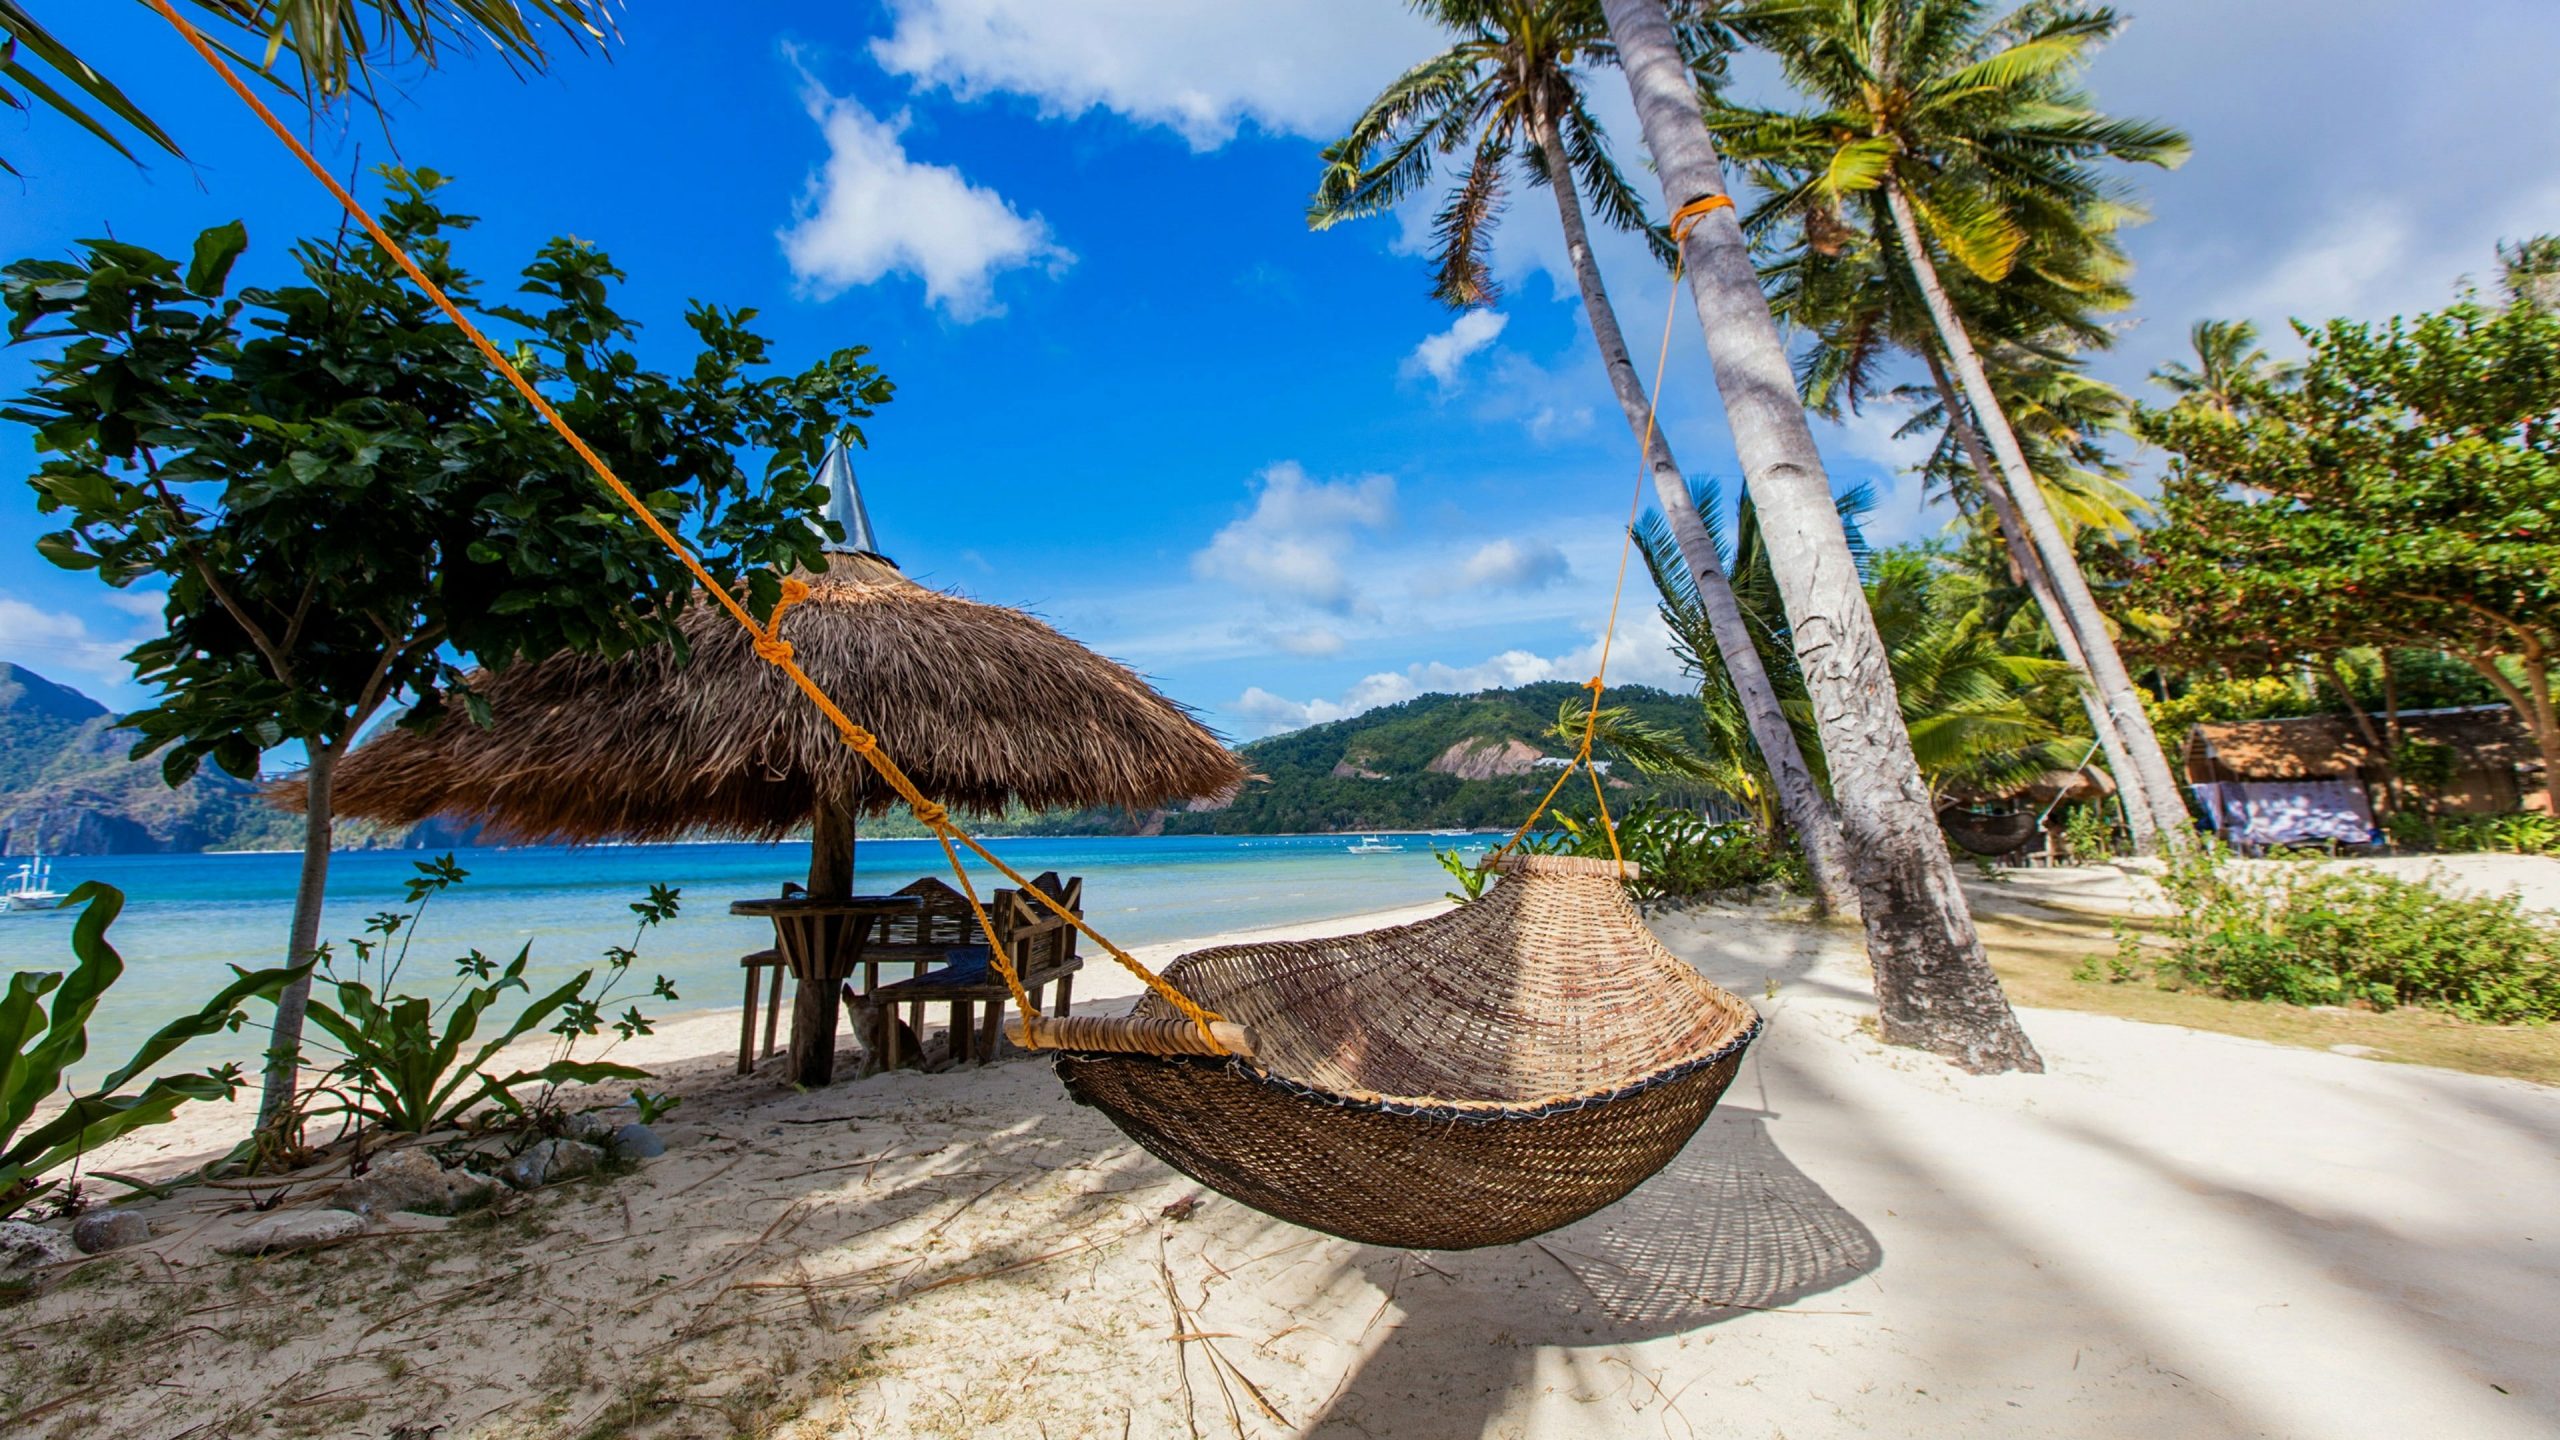 Resort wallpaper, sandy beach, palapa, parasol, braided hammock, philippines